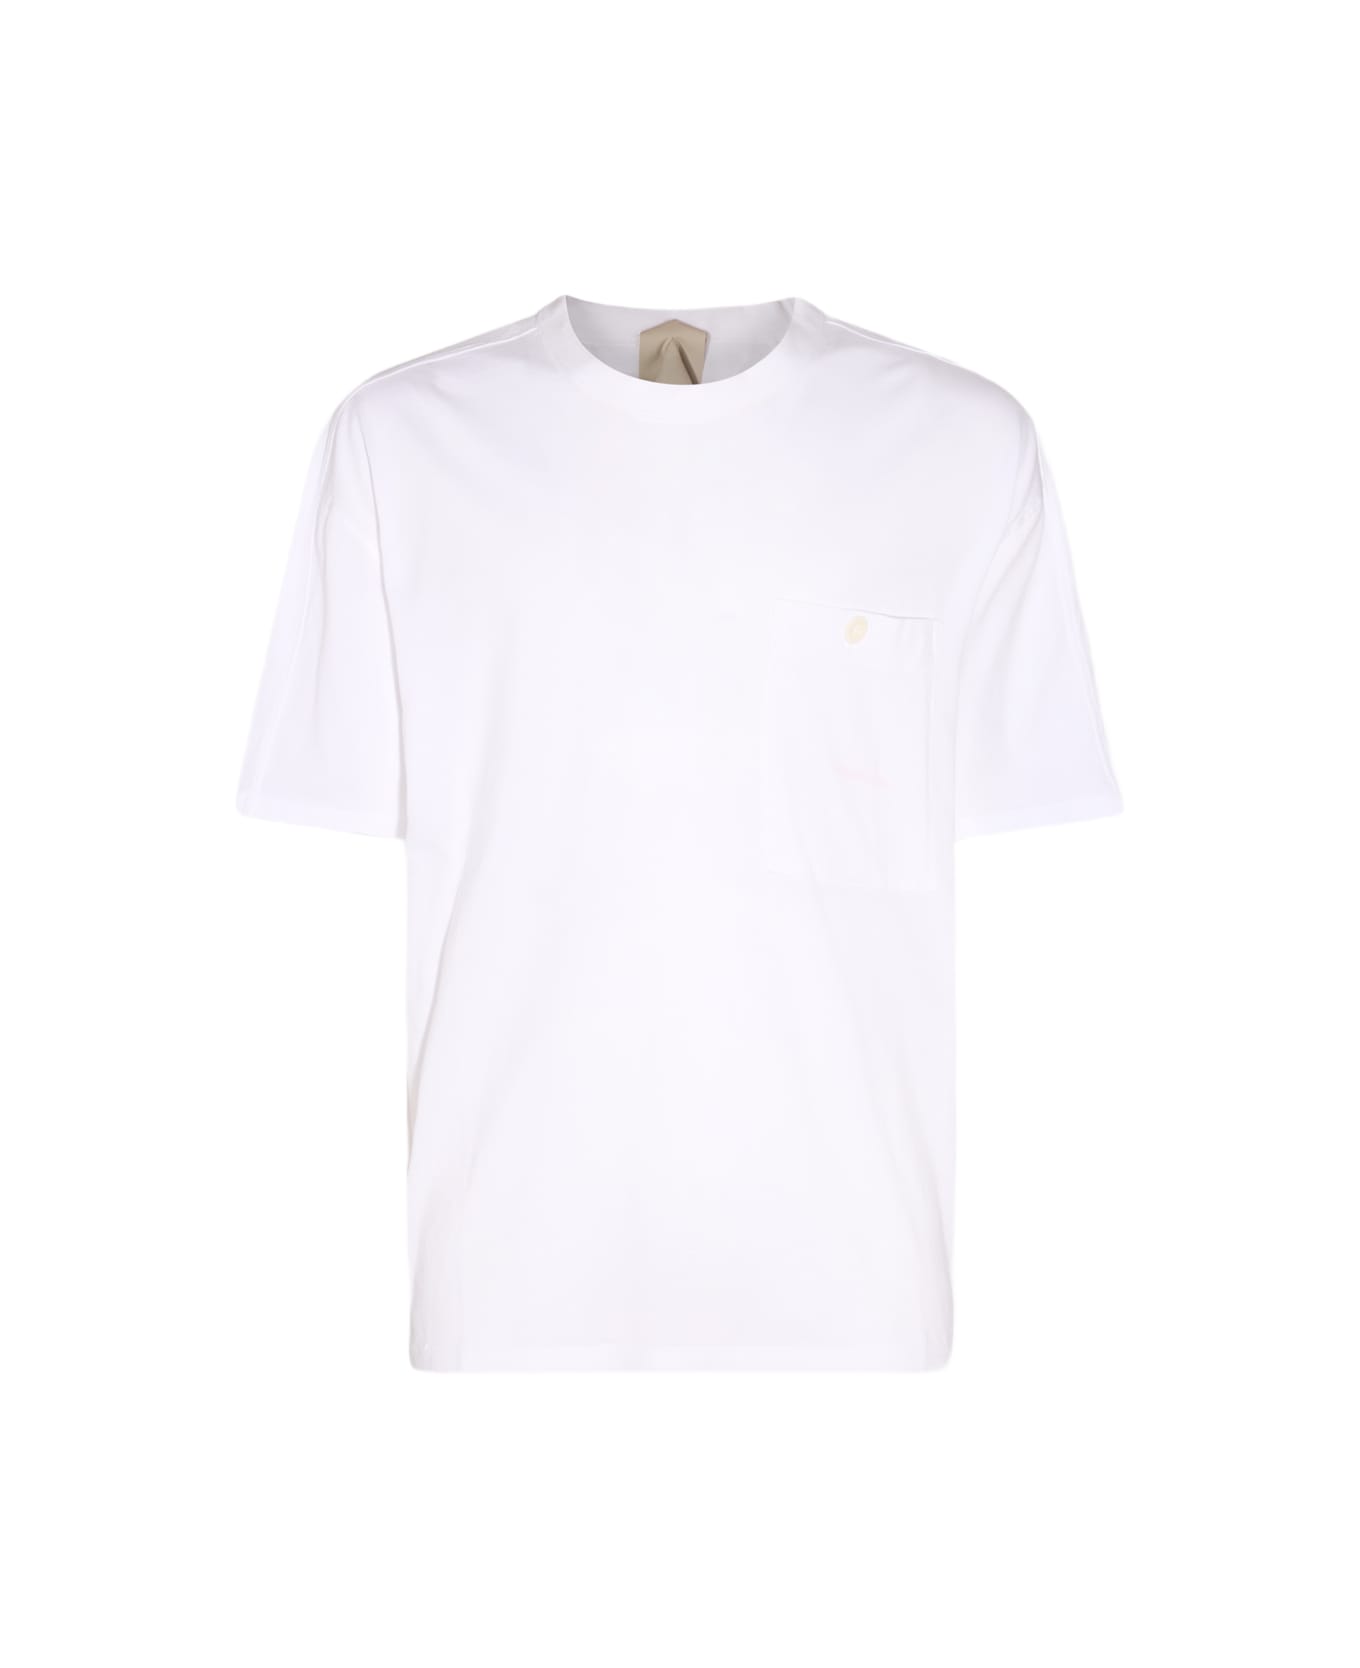 Ten C White Cotton T-shirt シャツ